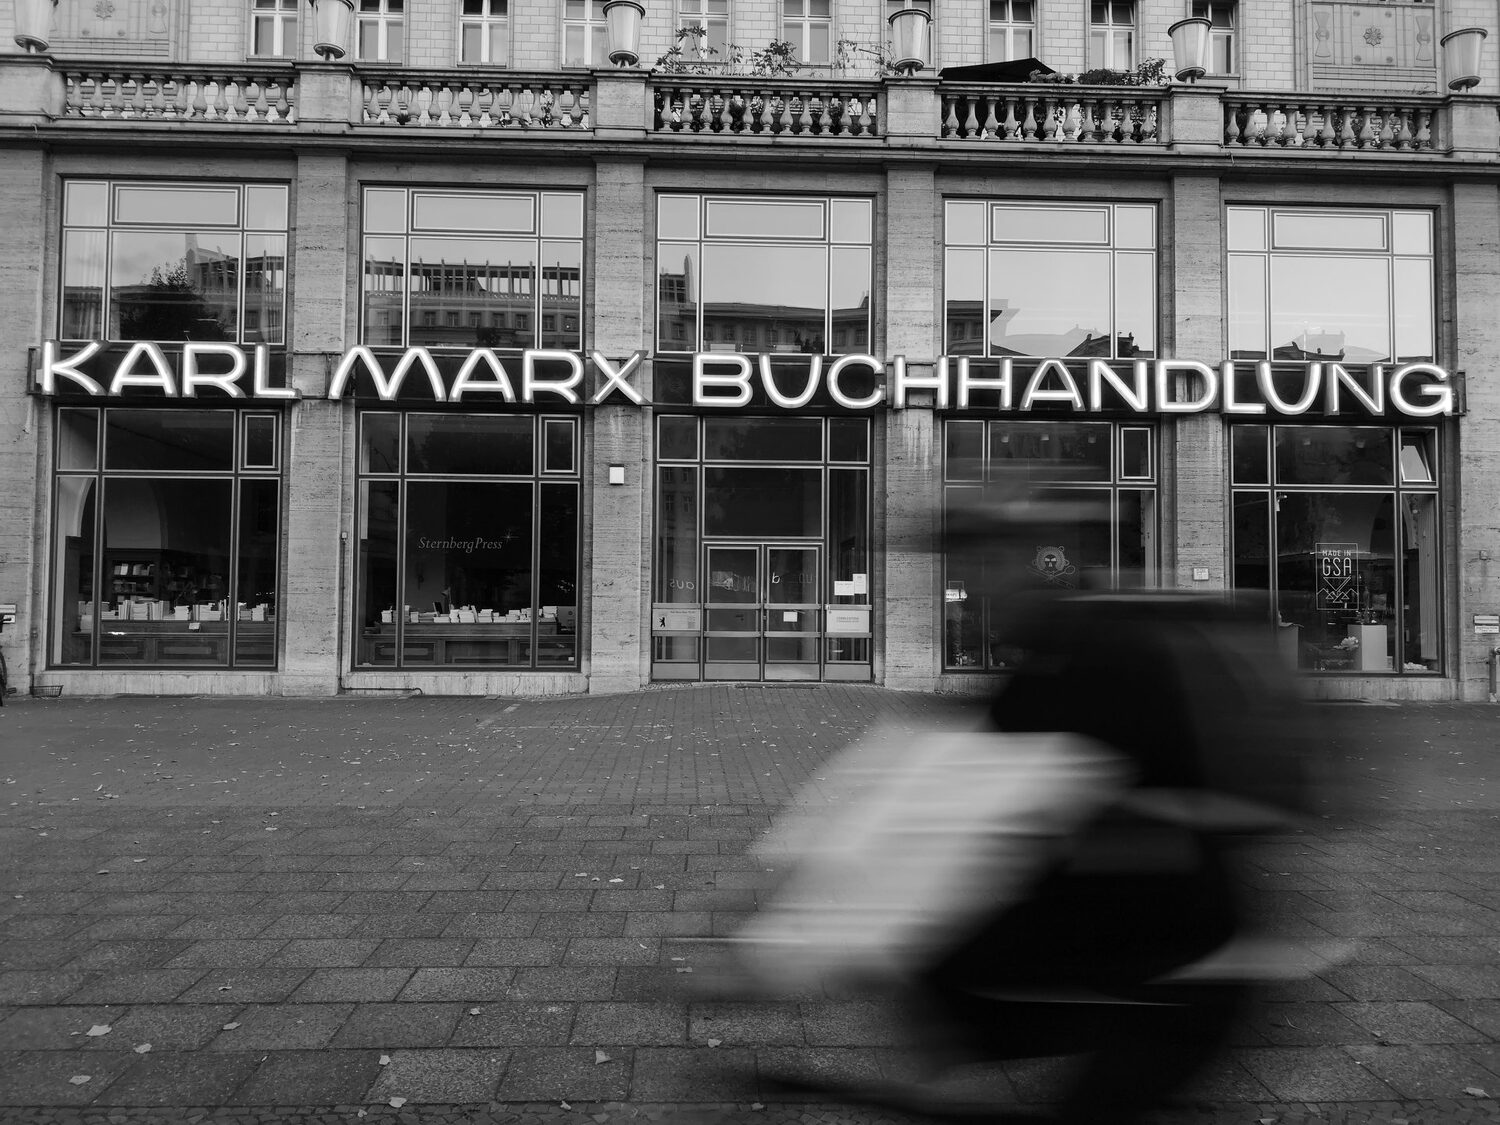 karl marx buchhandlung bookstore berlin - karl marx allee cyclist